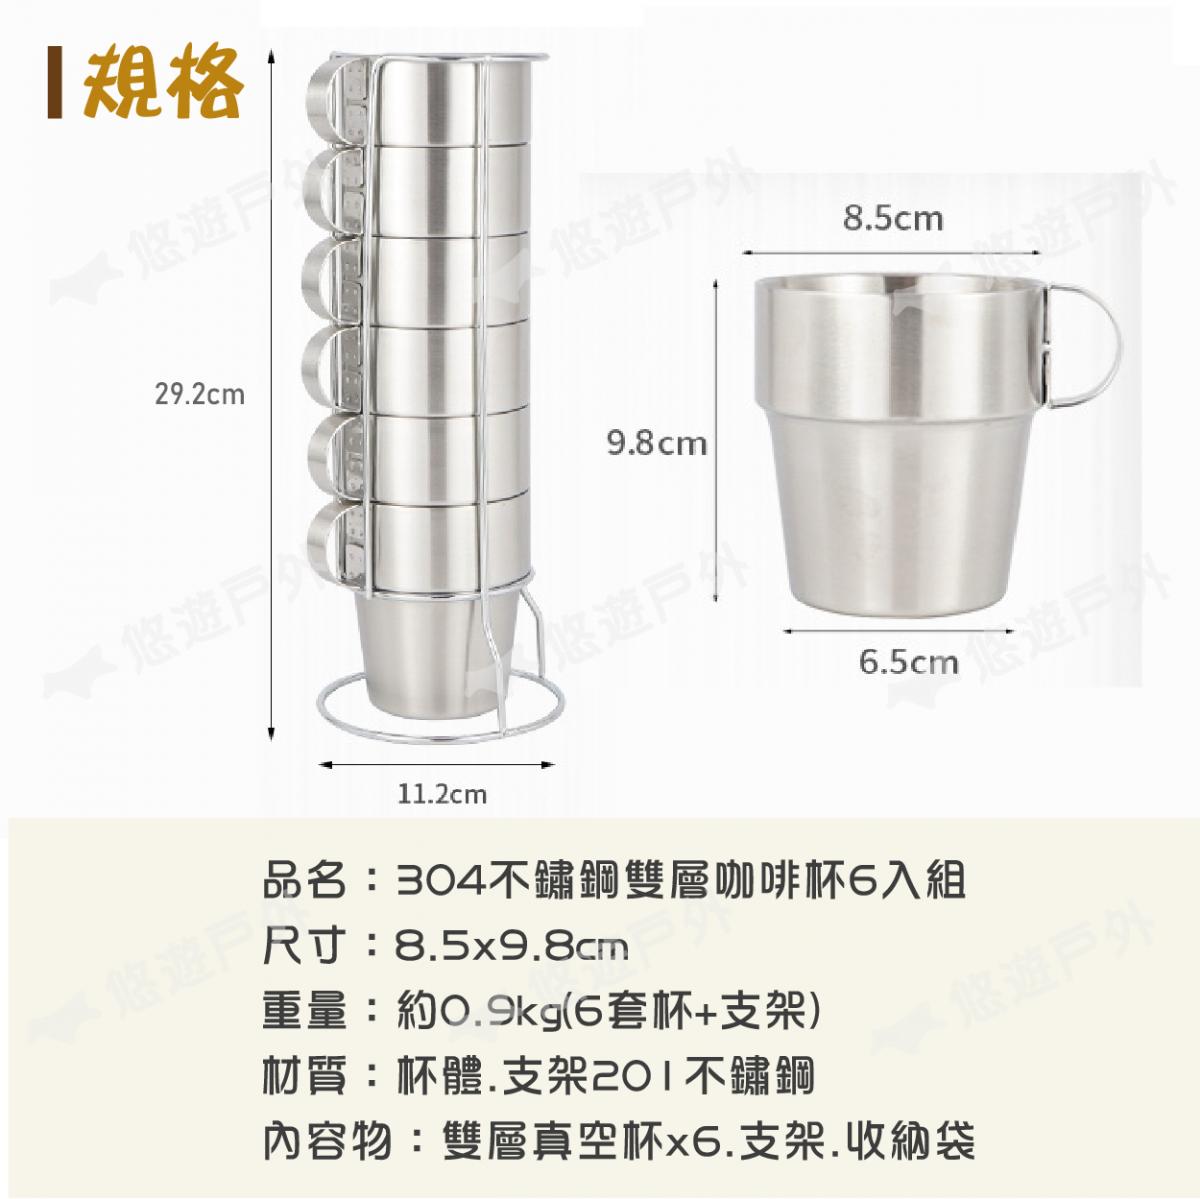 【CLS】304不鏽鋼雙層咖啡杯6入組 含杯架+收納袋 (悠遊戶外) 5